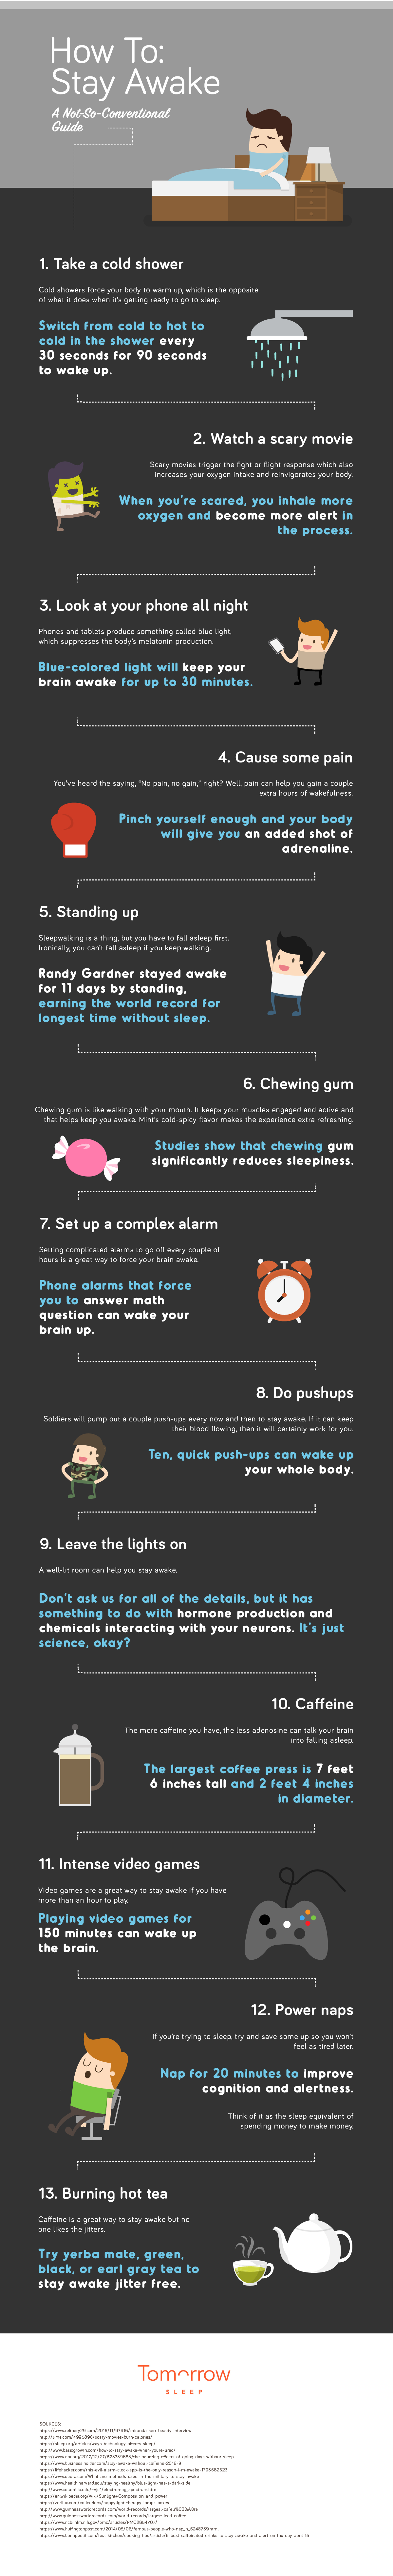 How To Stay Awake: